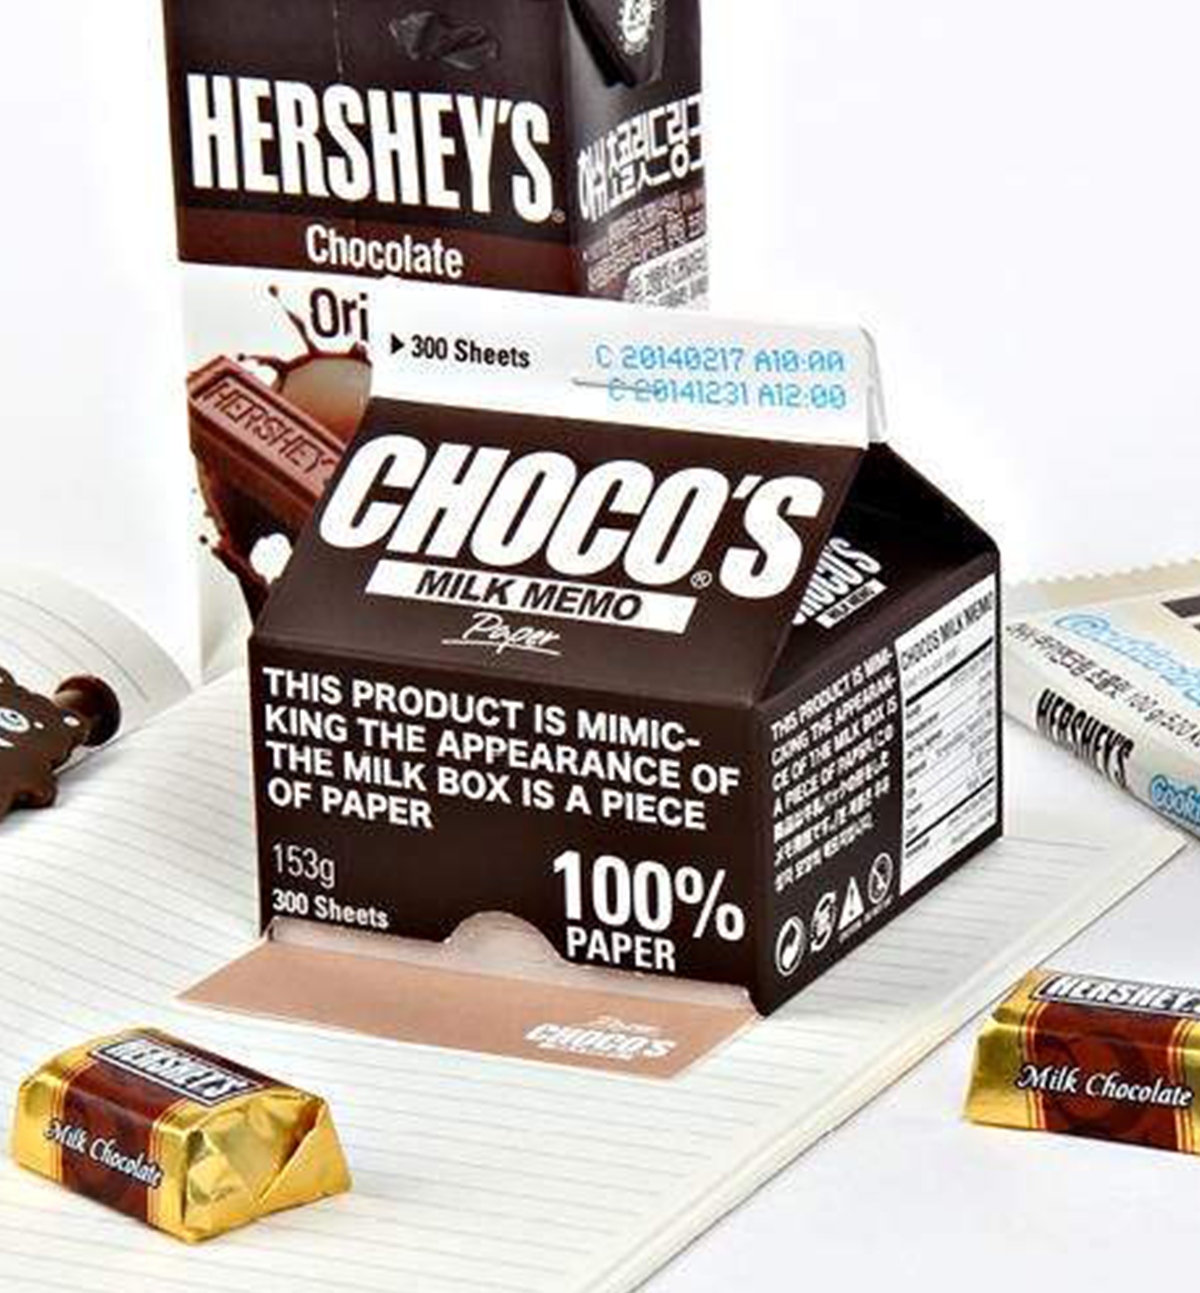 Choco's Milk Memopad